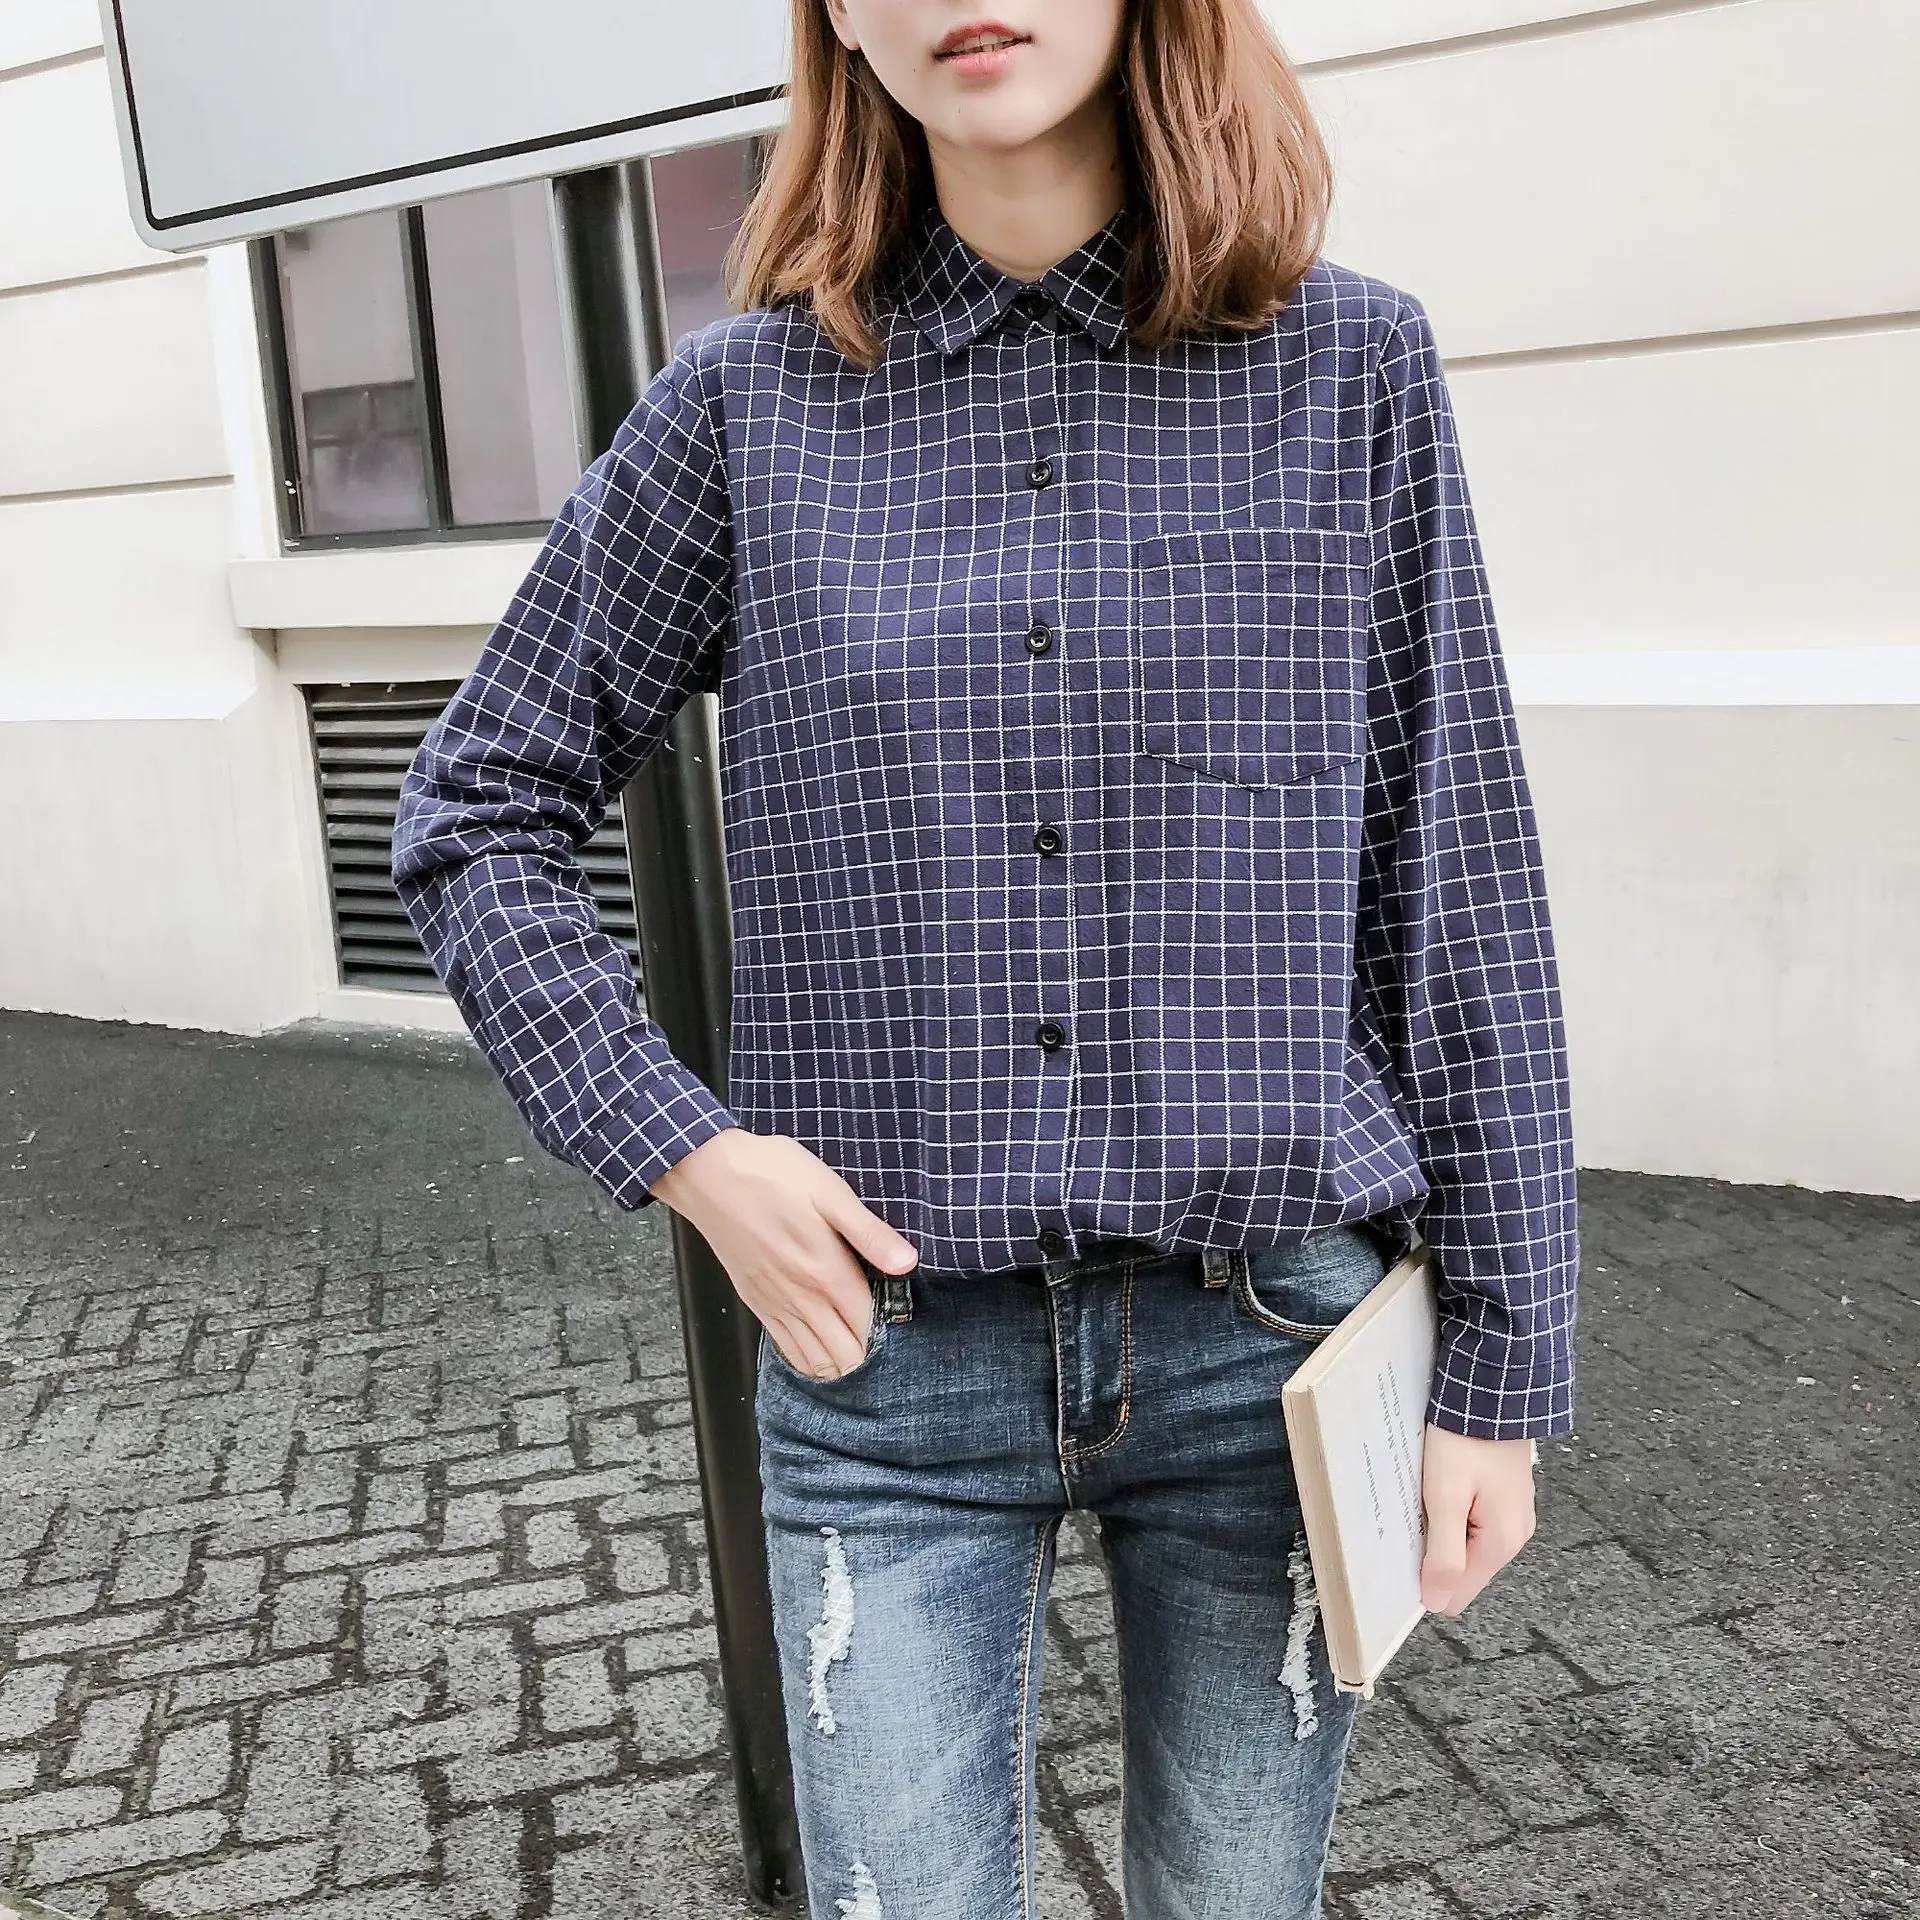  FEKEHA Women Plaid Shirts 2019 Autumn Long Sleeve Buttons Pocket Blouses Office Shirt Lady Cotton C